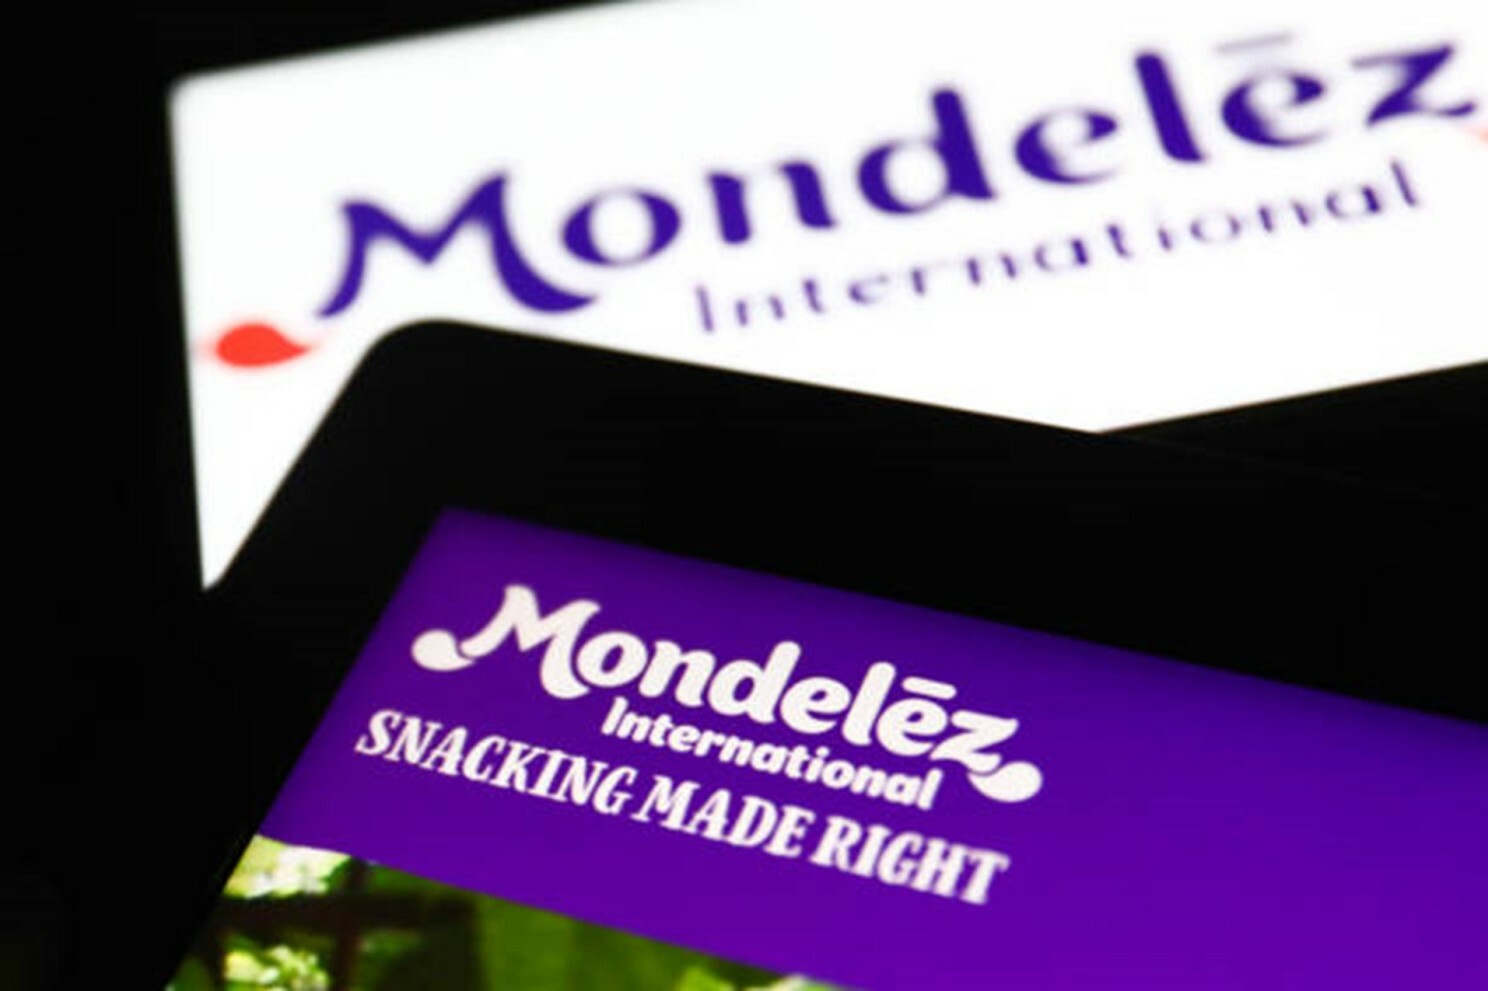 Snack Maker Mondelez Settles NotPetya 'Act of War' Insurance Suit with Zurich